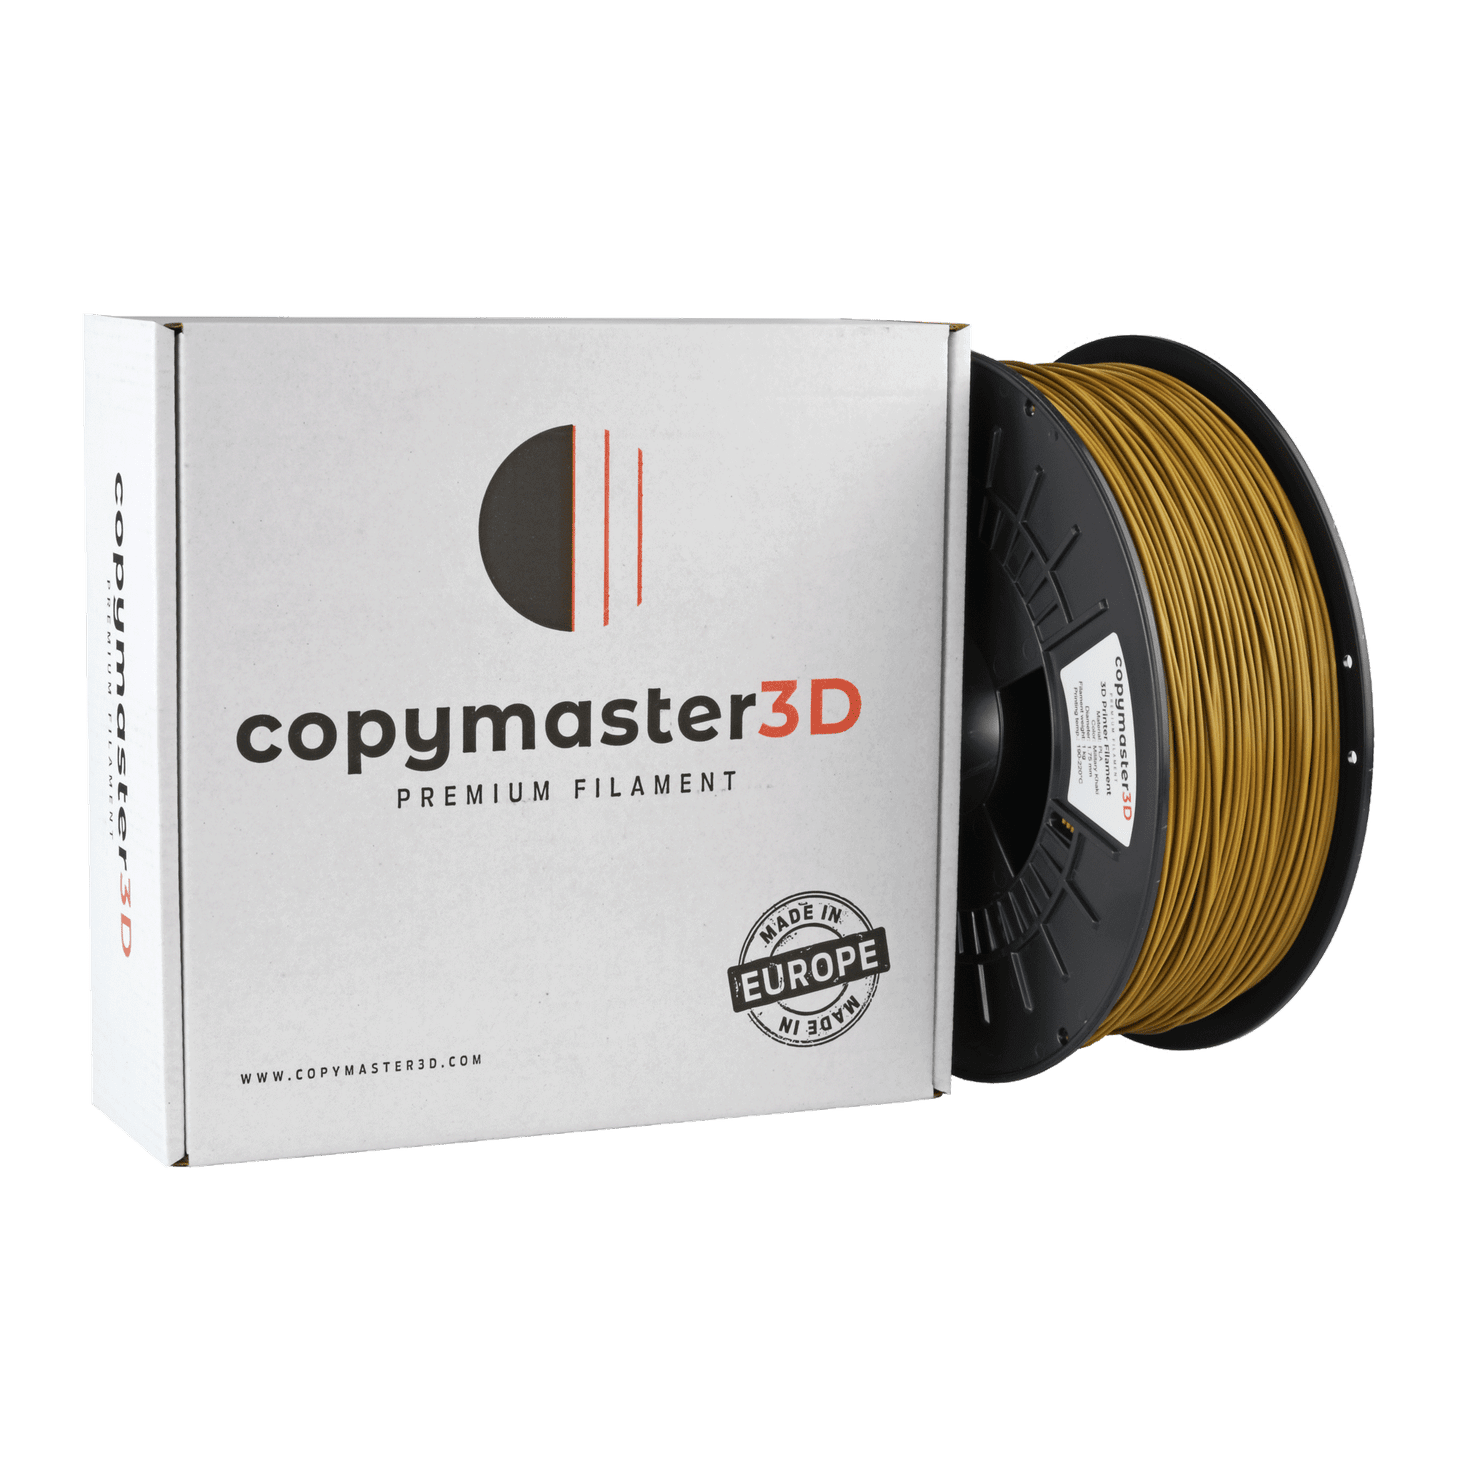 Copymaster3D Premium PLA Filament 1.75mm 1KG Military Khaki